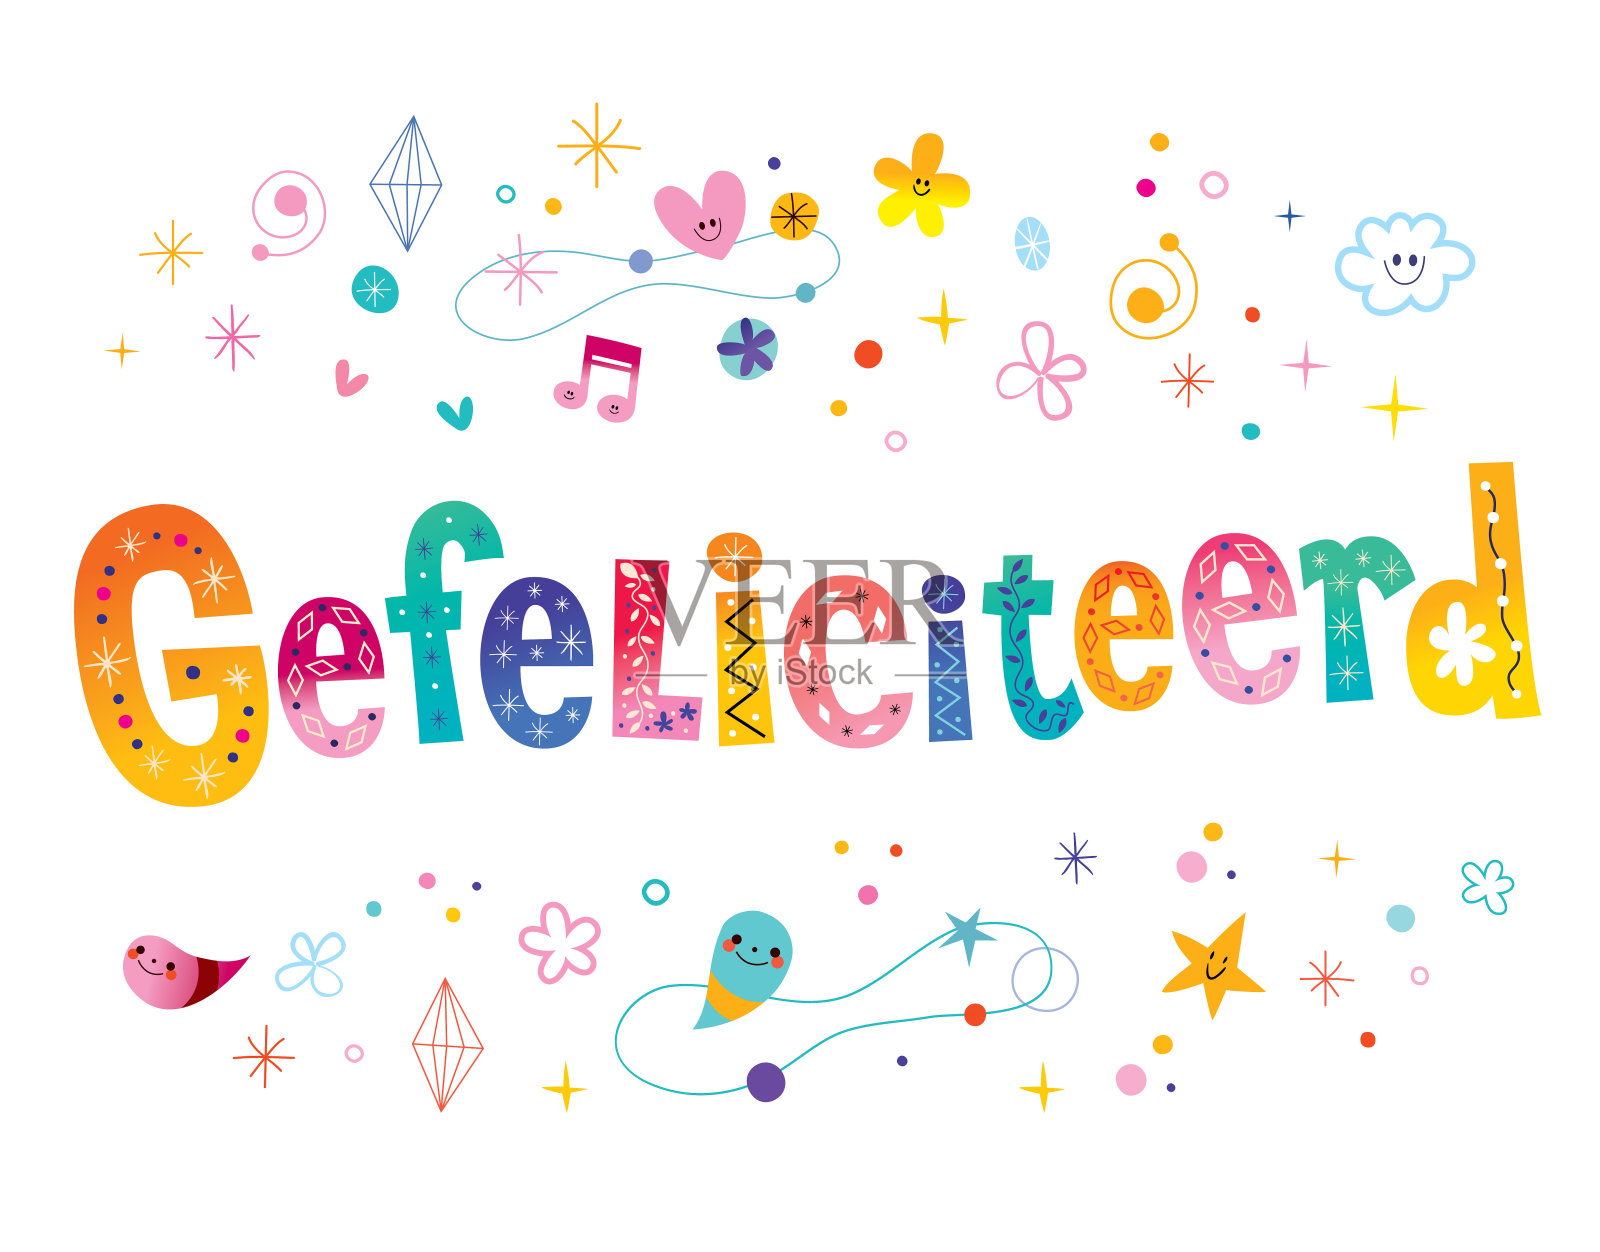 gefeliciteerd——荷兰语中表示祝贺插画图片素材